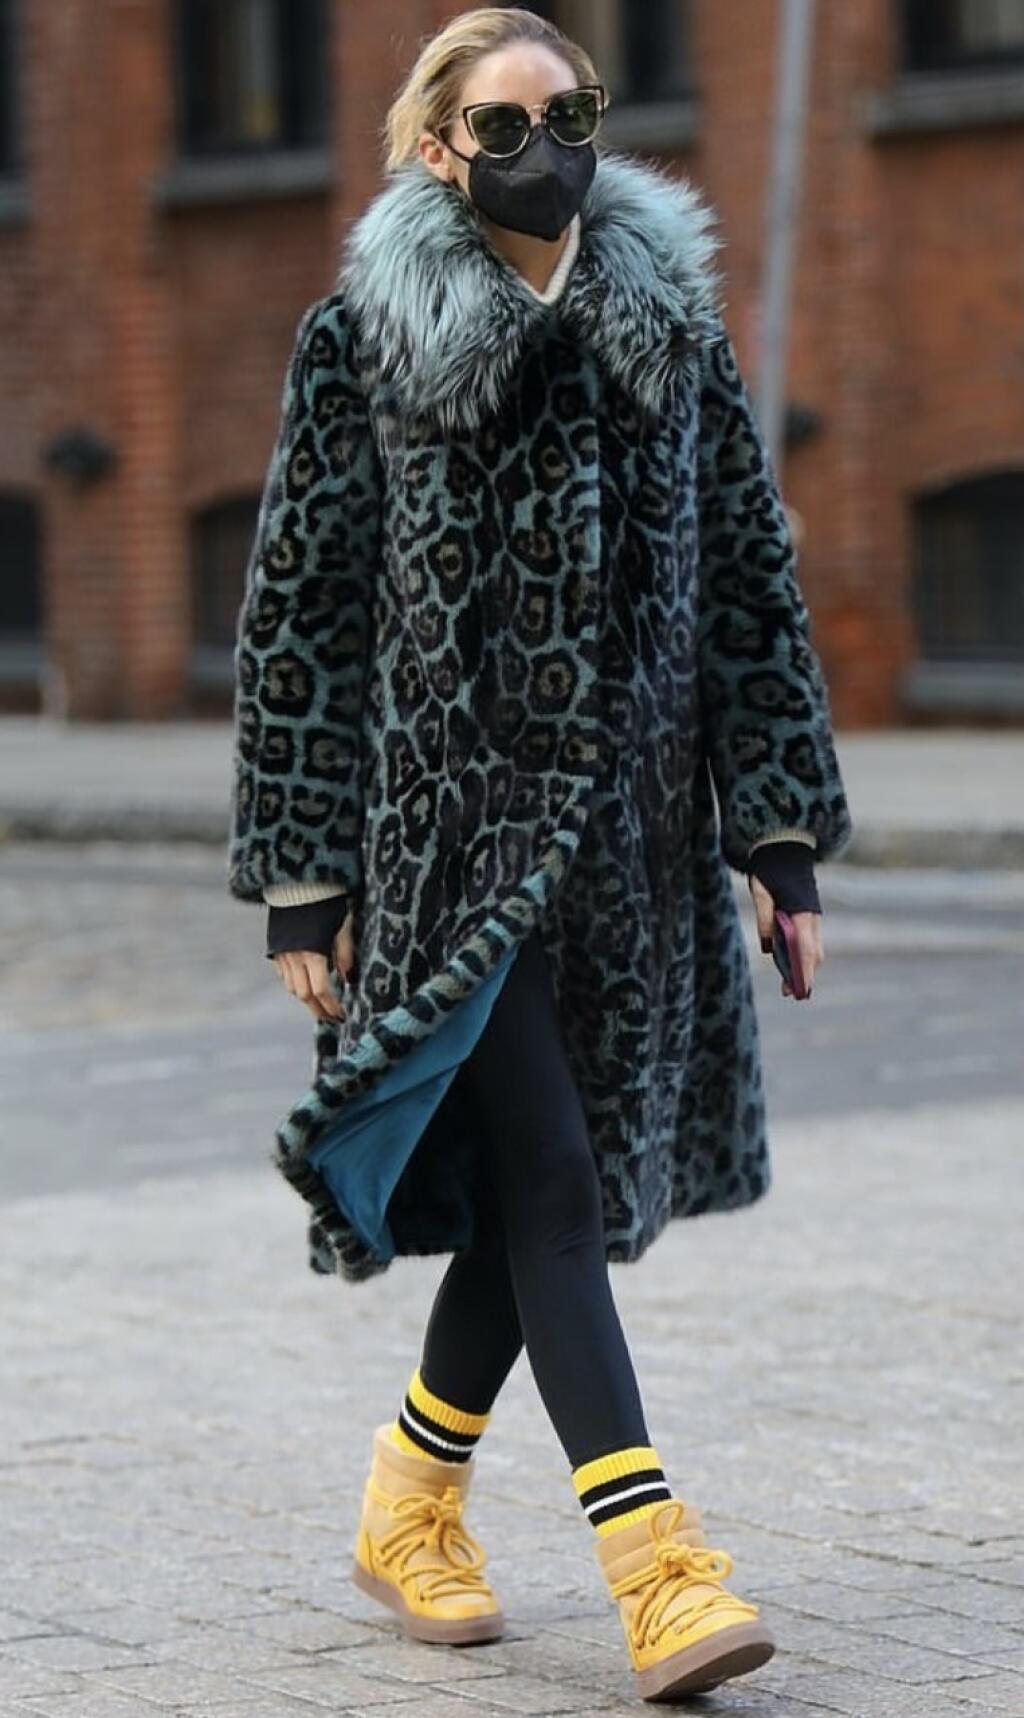 Leopard Print Coat. 60+ Fashionable '90s Ladies Outfit Ideas That Come Back - 12